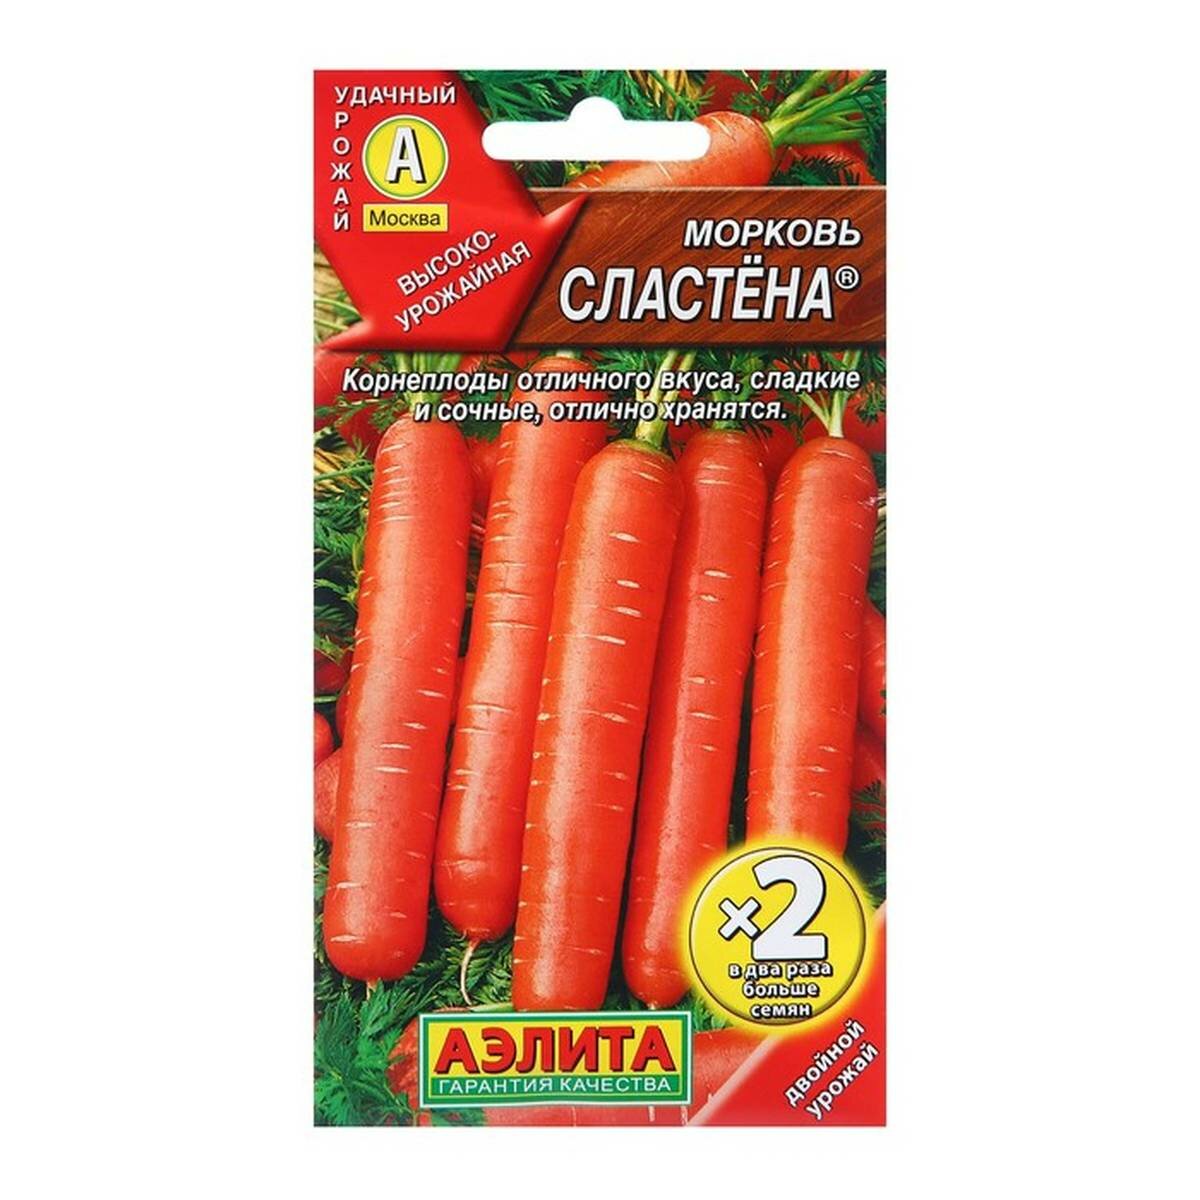 Семена Морковь Сластена ® Ц/П х2 4г 2 упак.